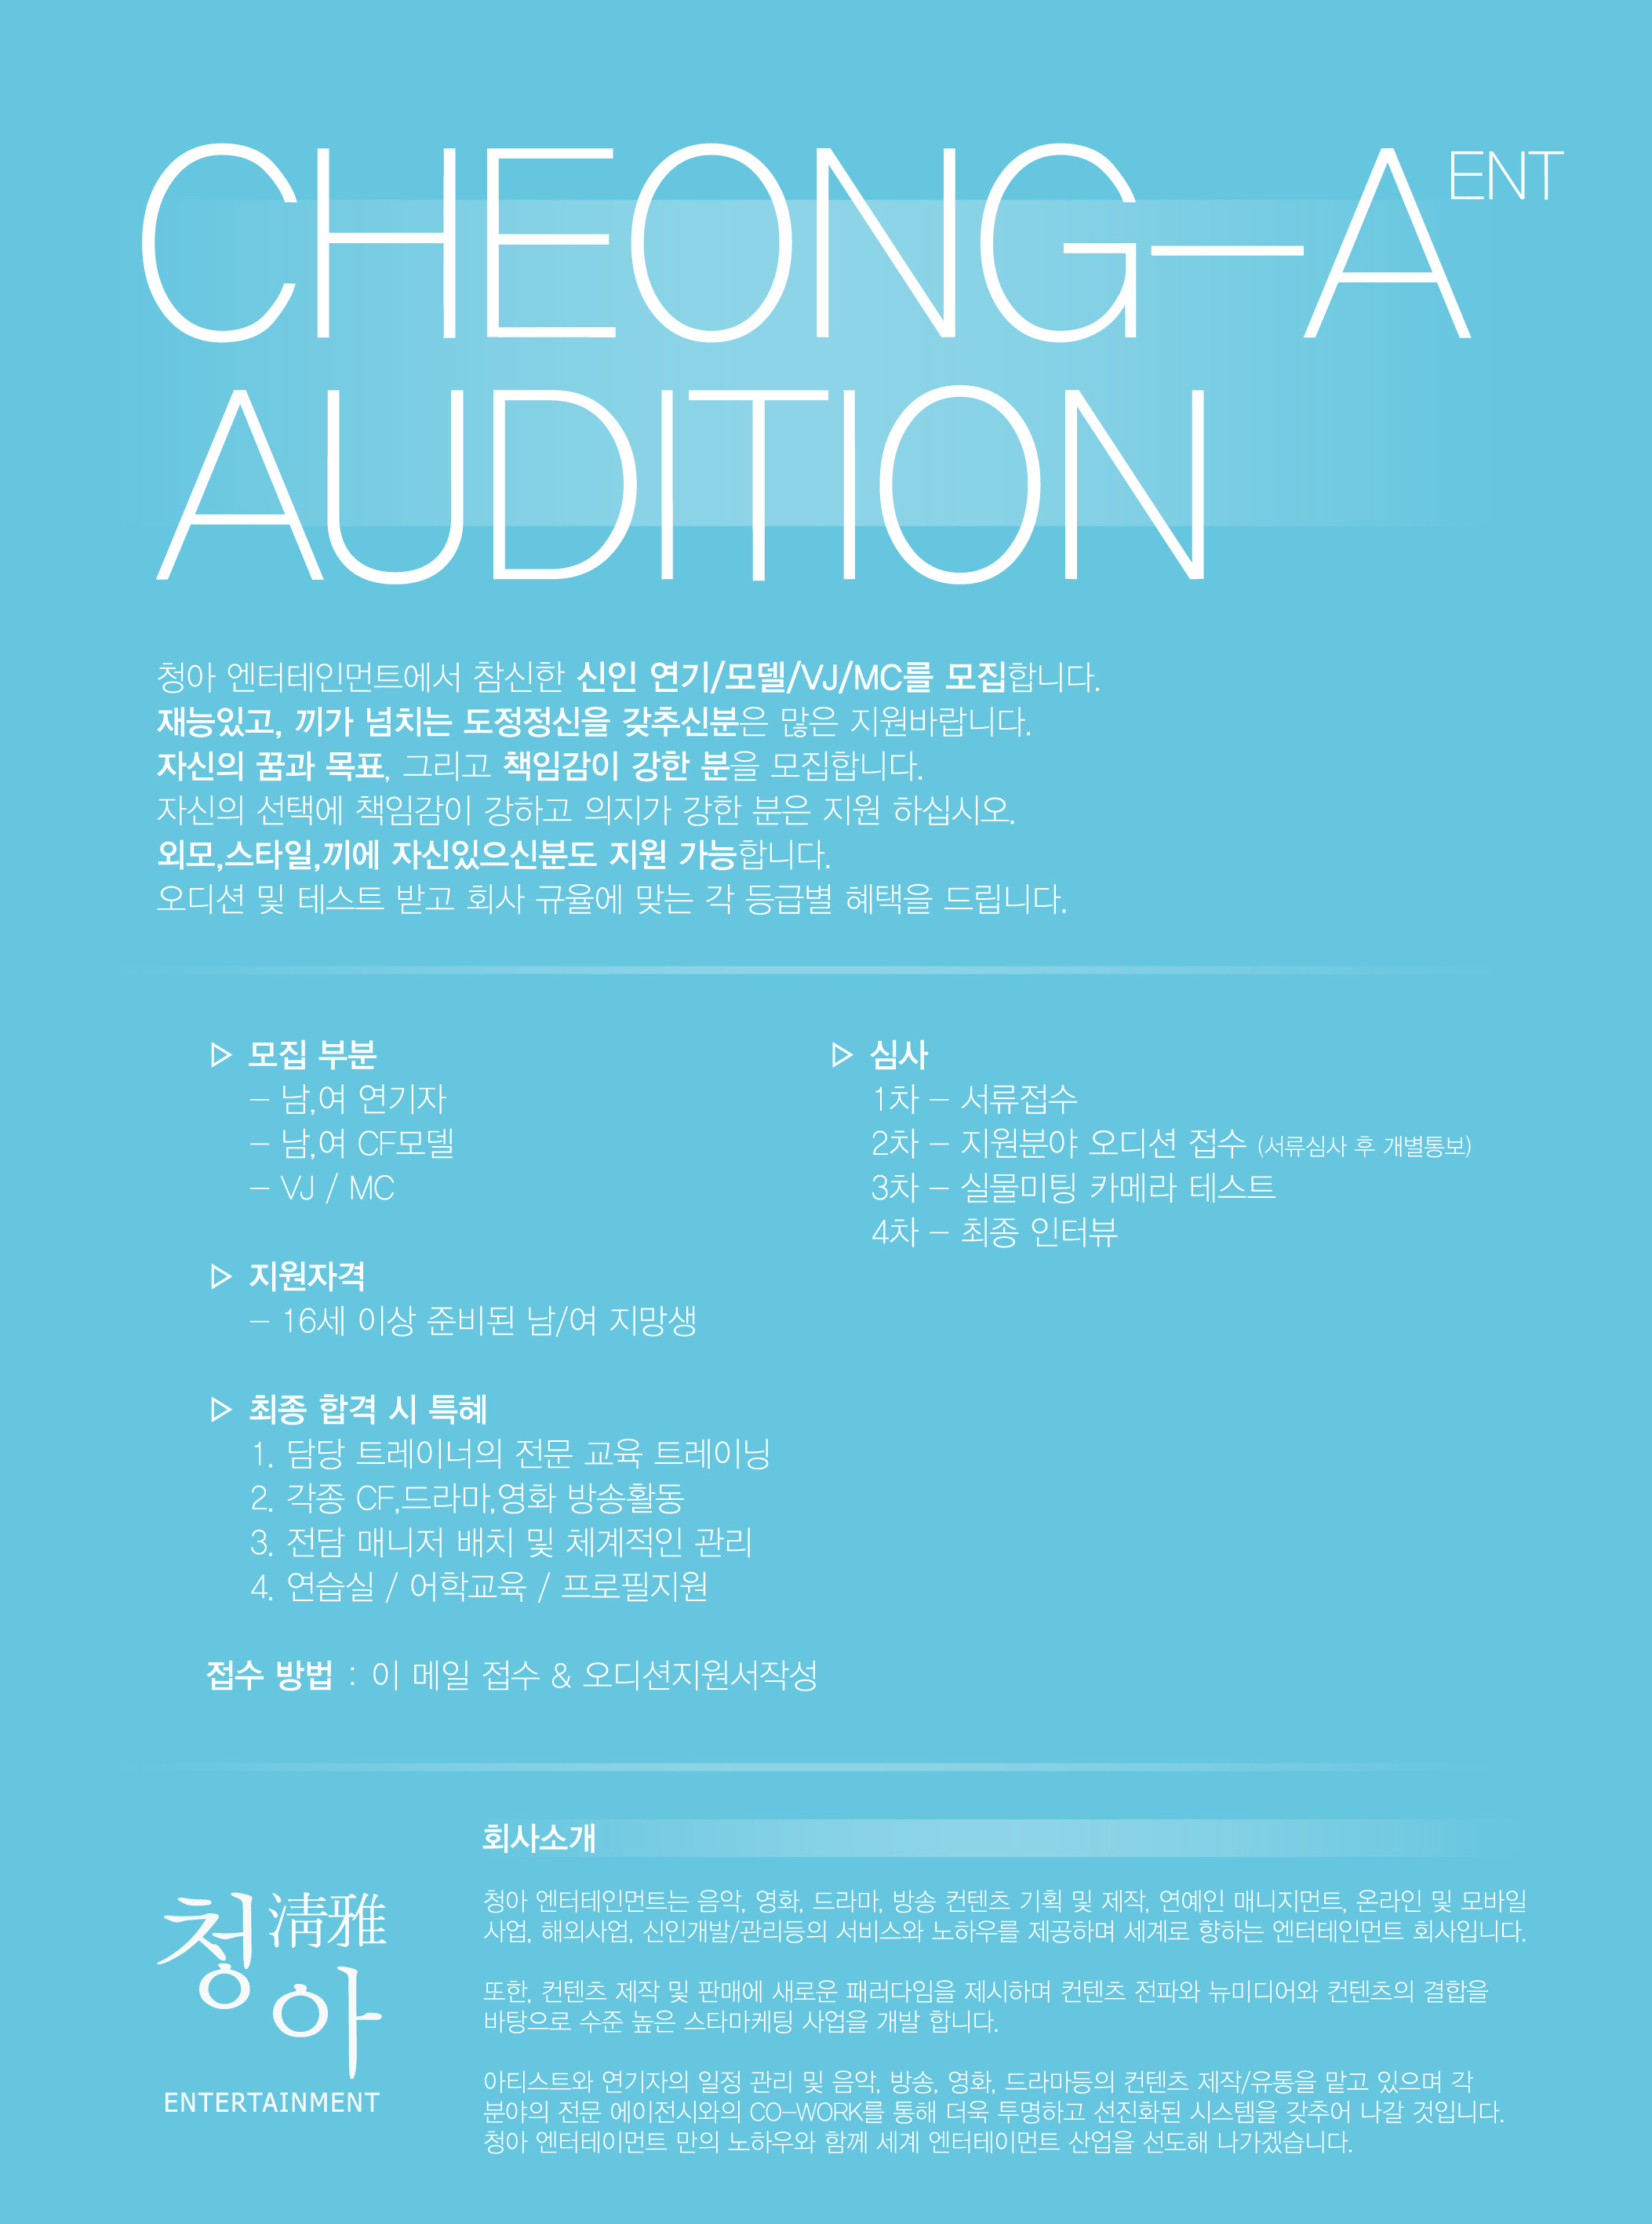 cheong-a_audition1.jpg